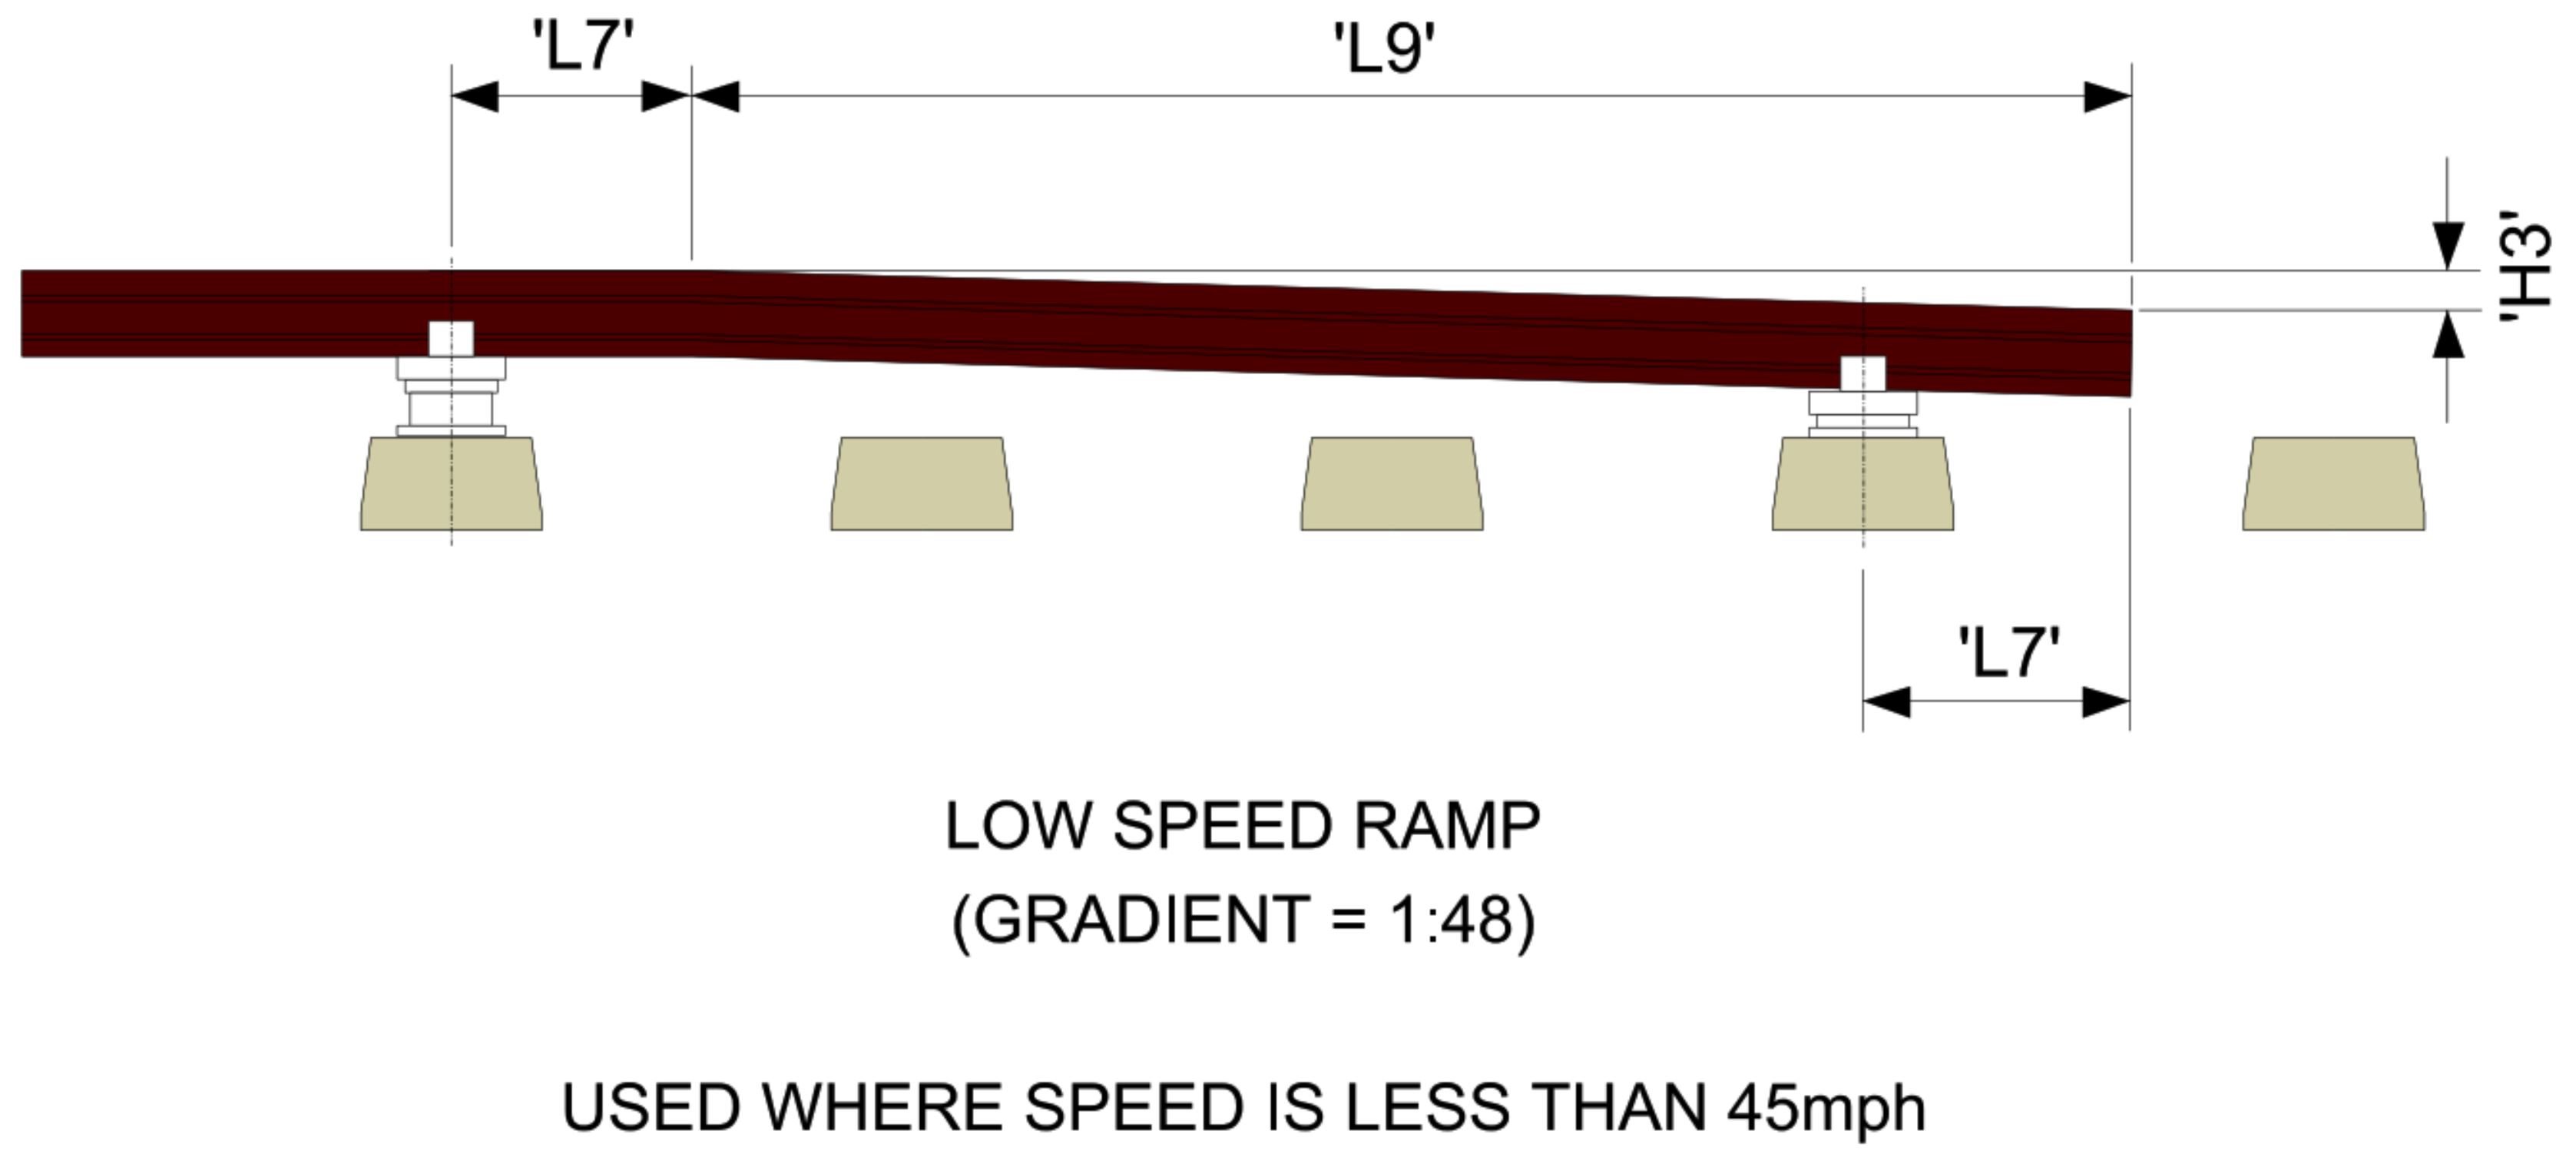 3rd Rail - Low Speed Ramp